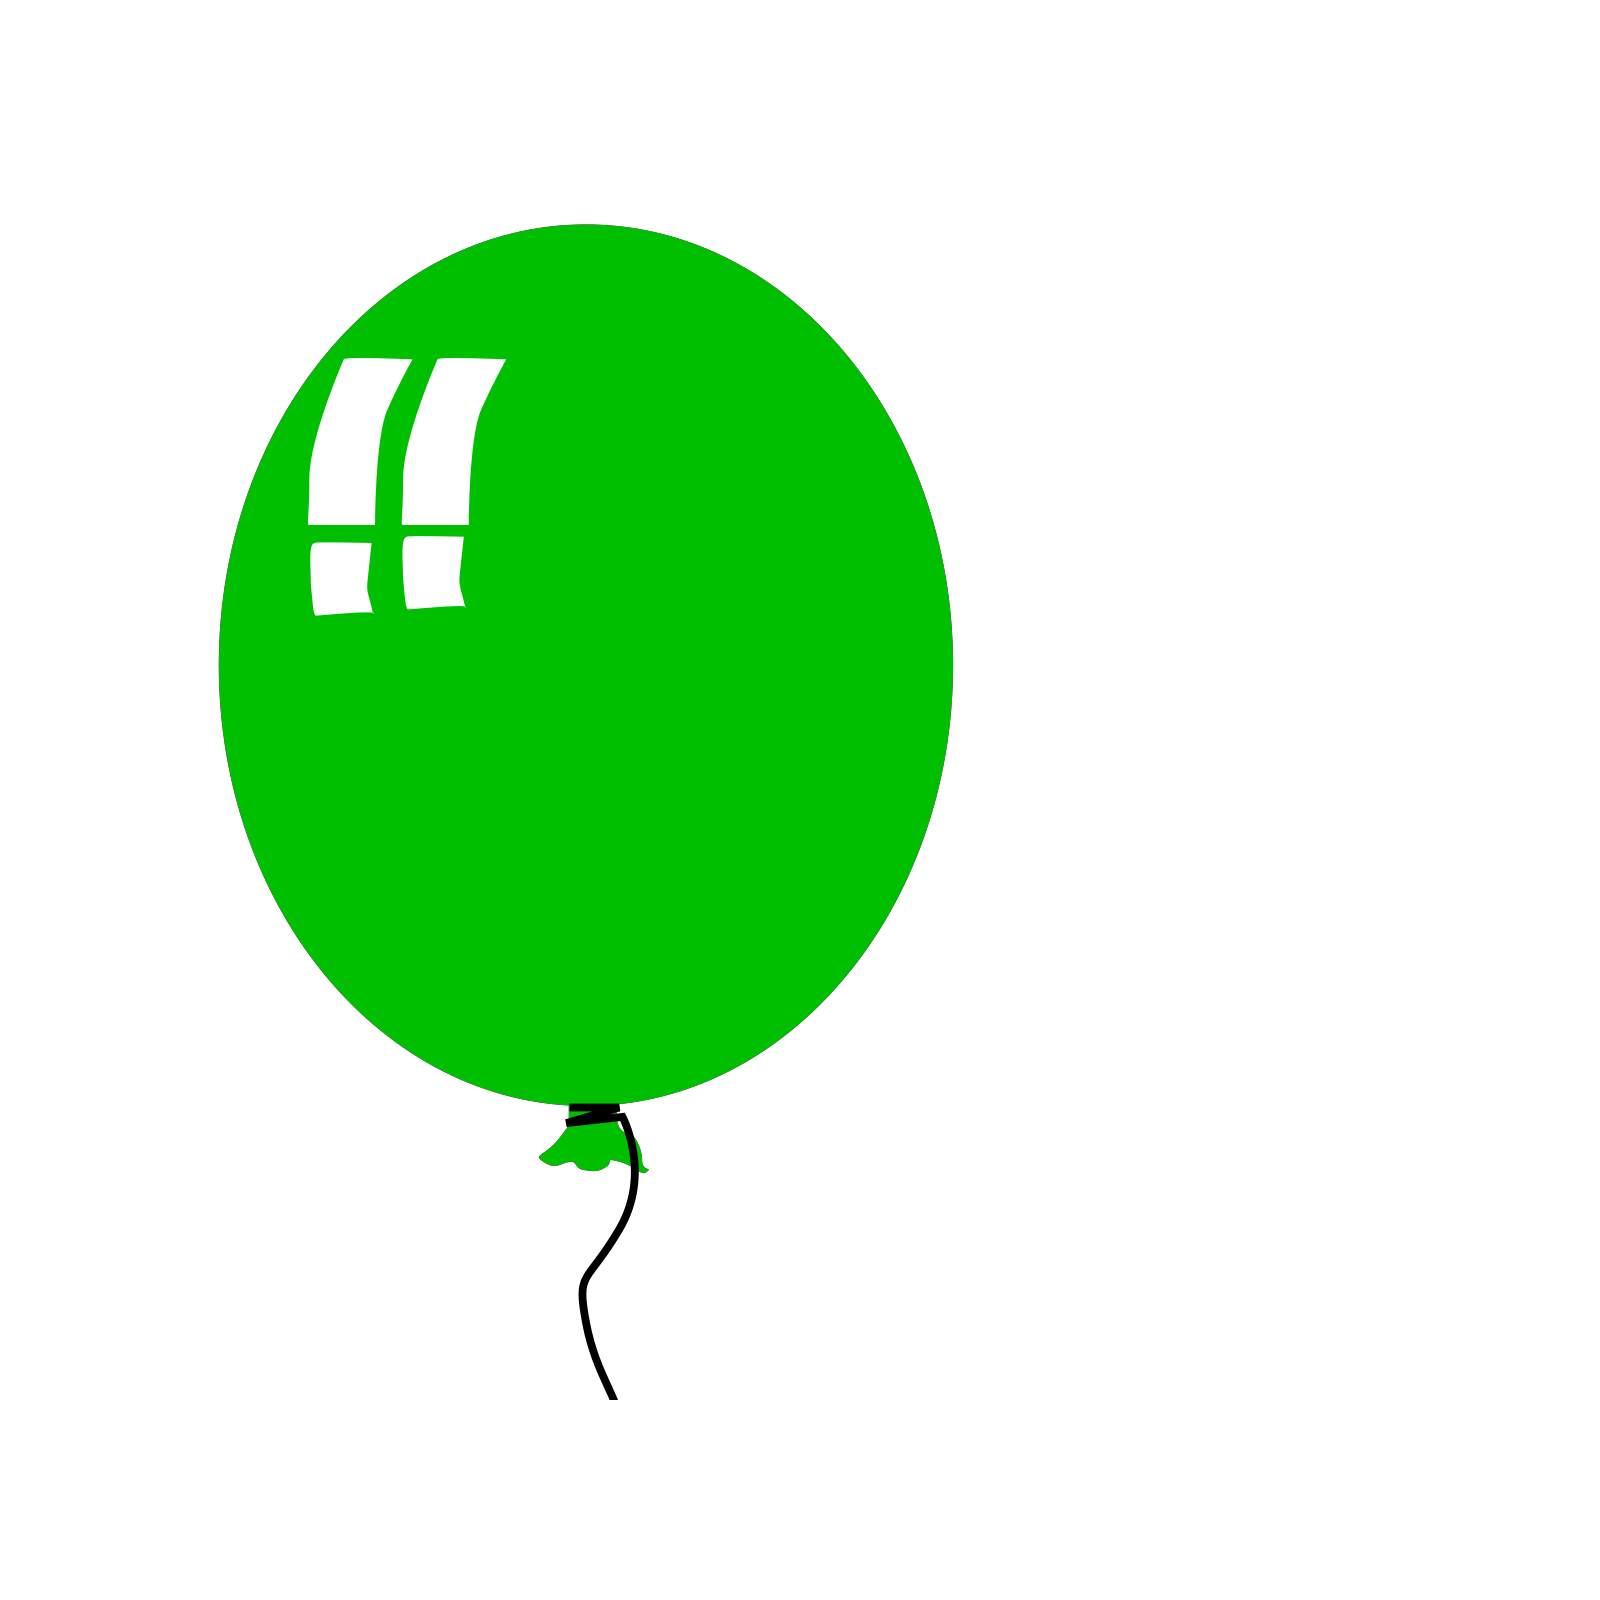 Ballons verts PNG Image Transparente